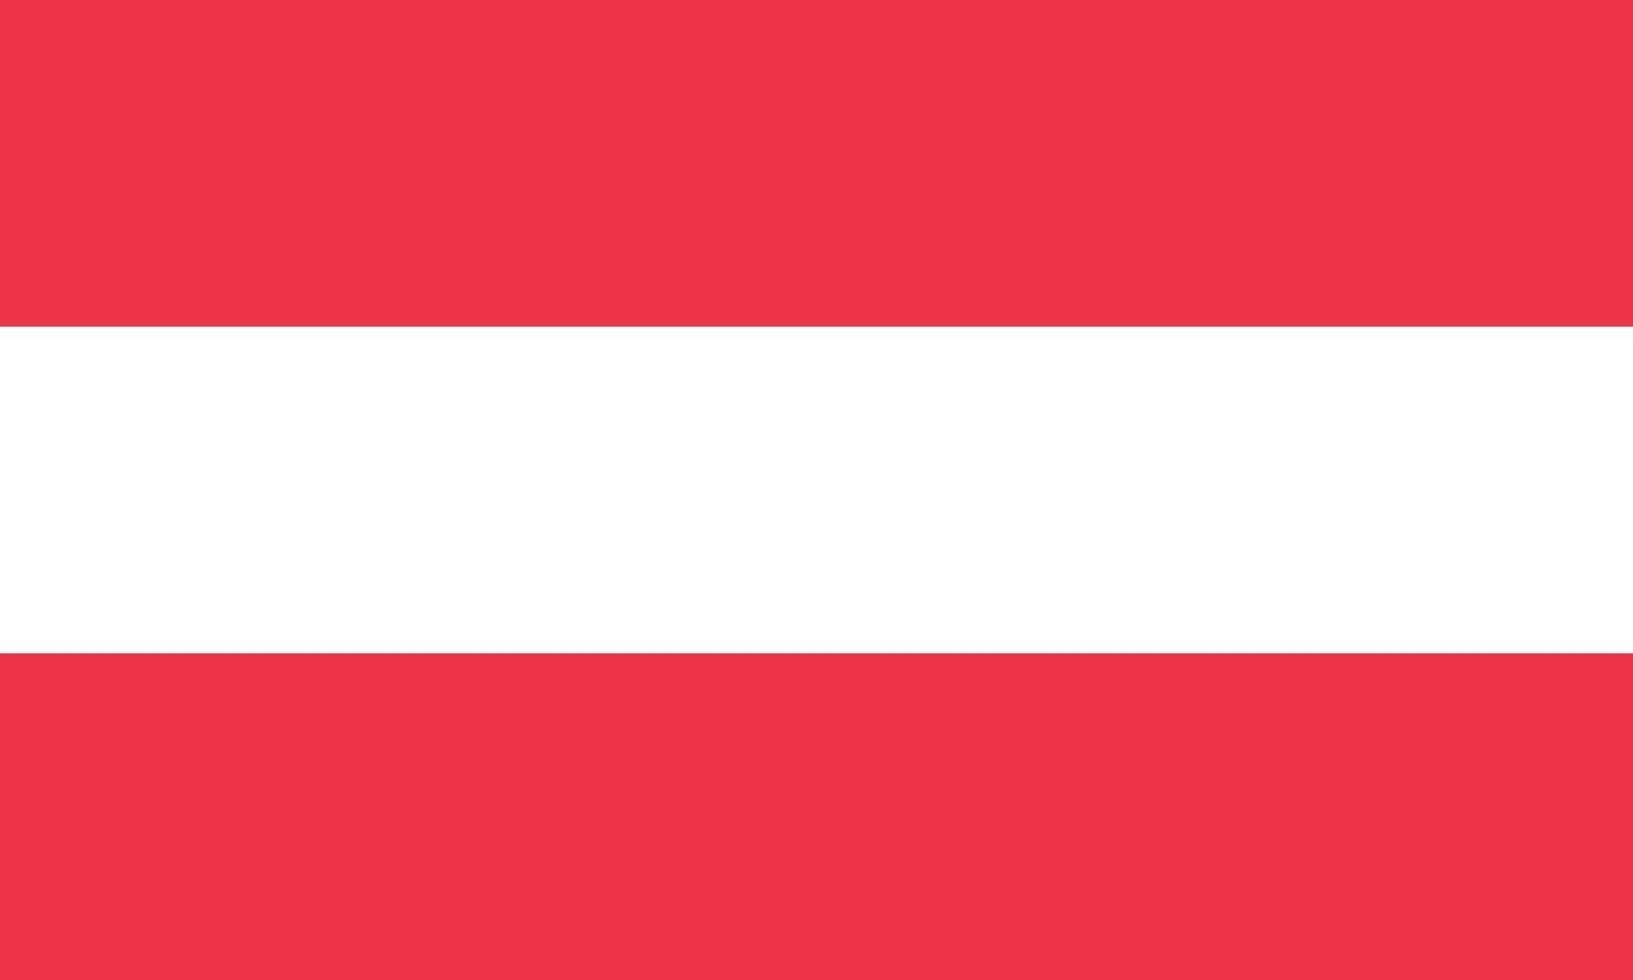 Vectorial illustration of the Austria flag vector